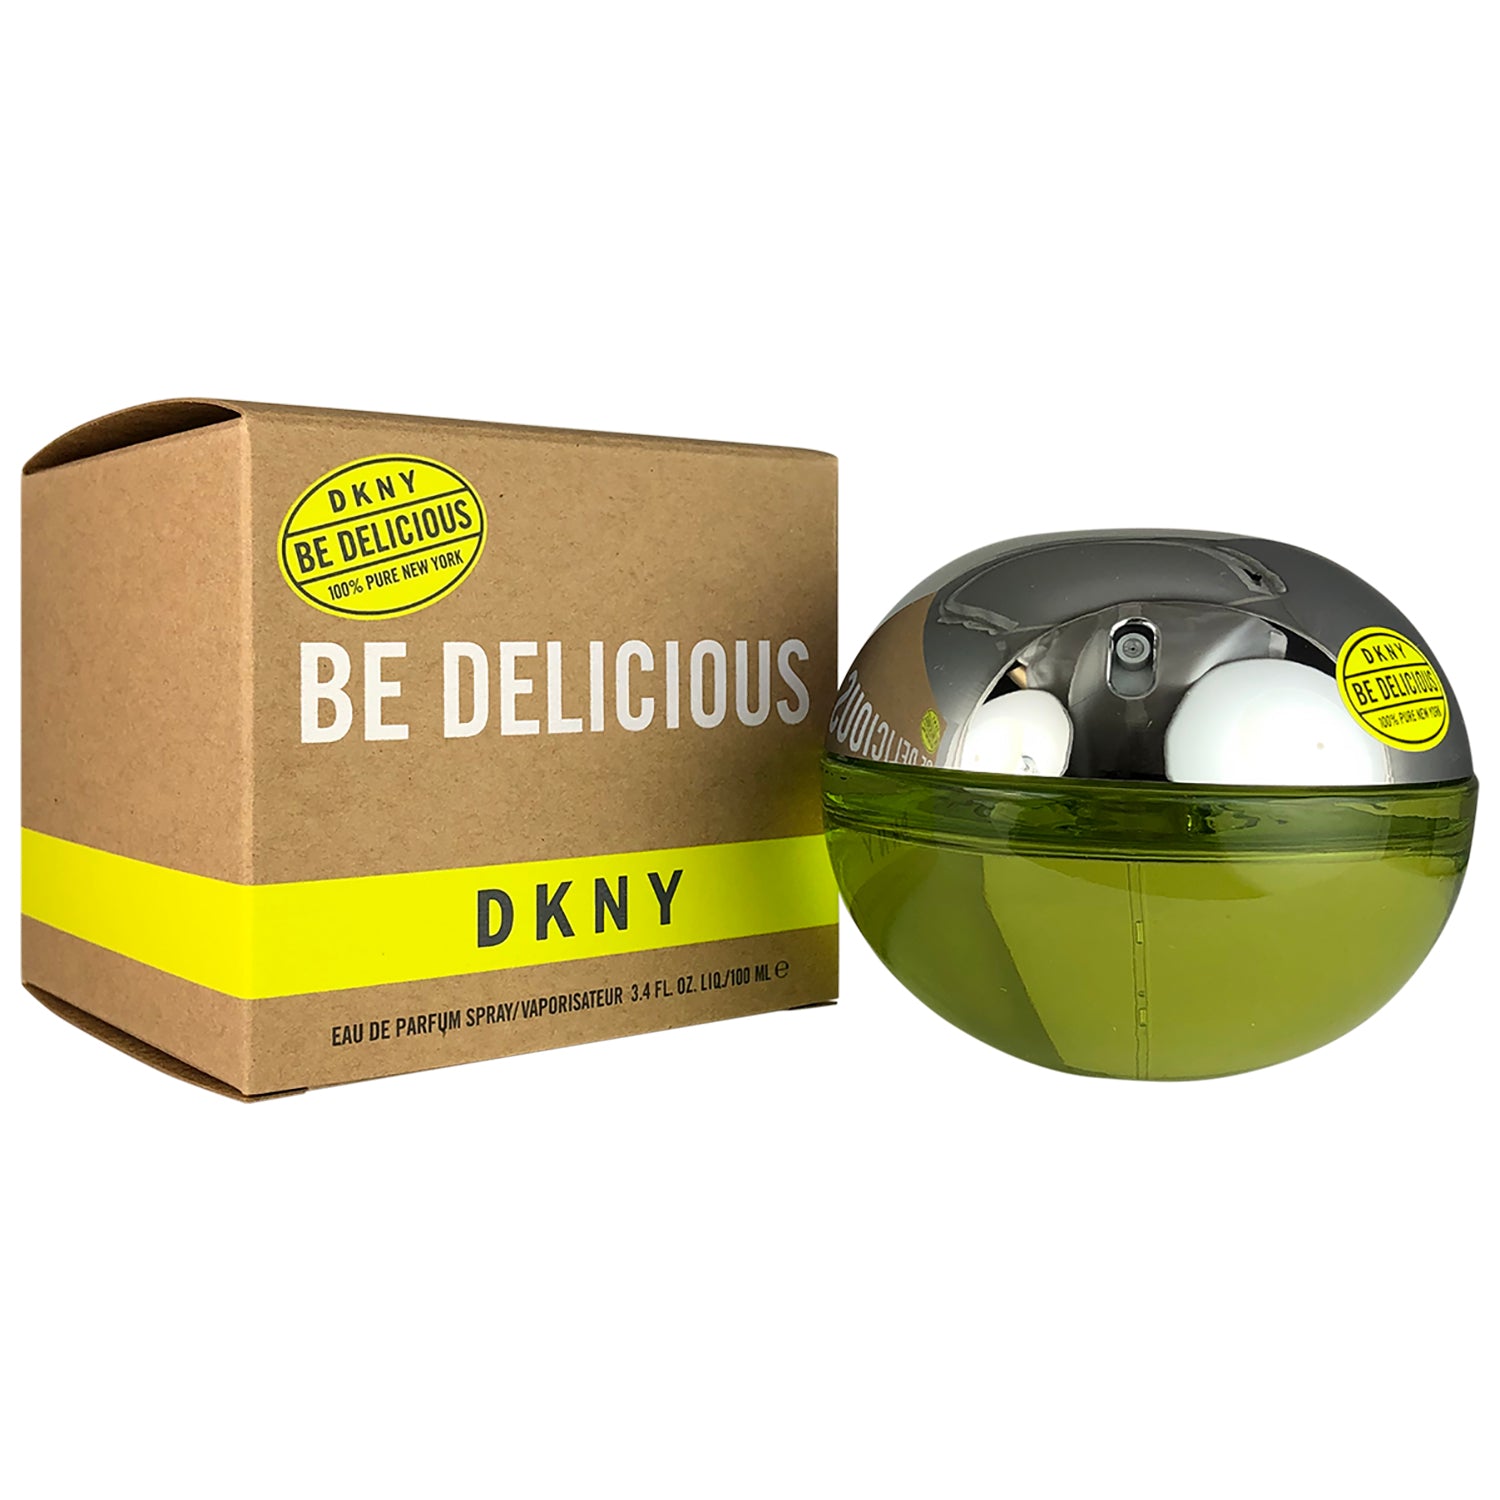 Donna Karan New York DKNY Be Delicious Eau de Parfum for Women